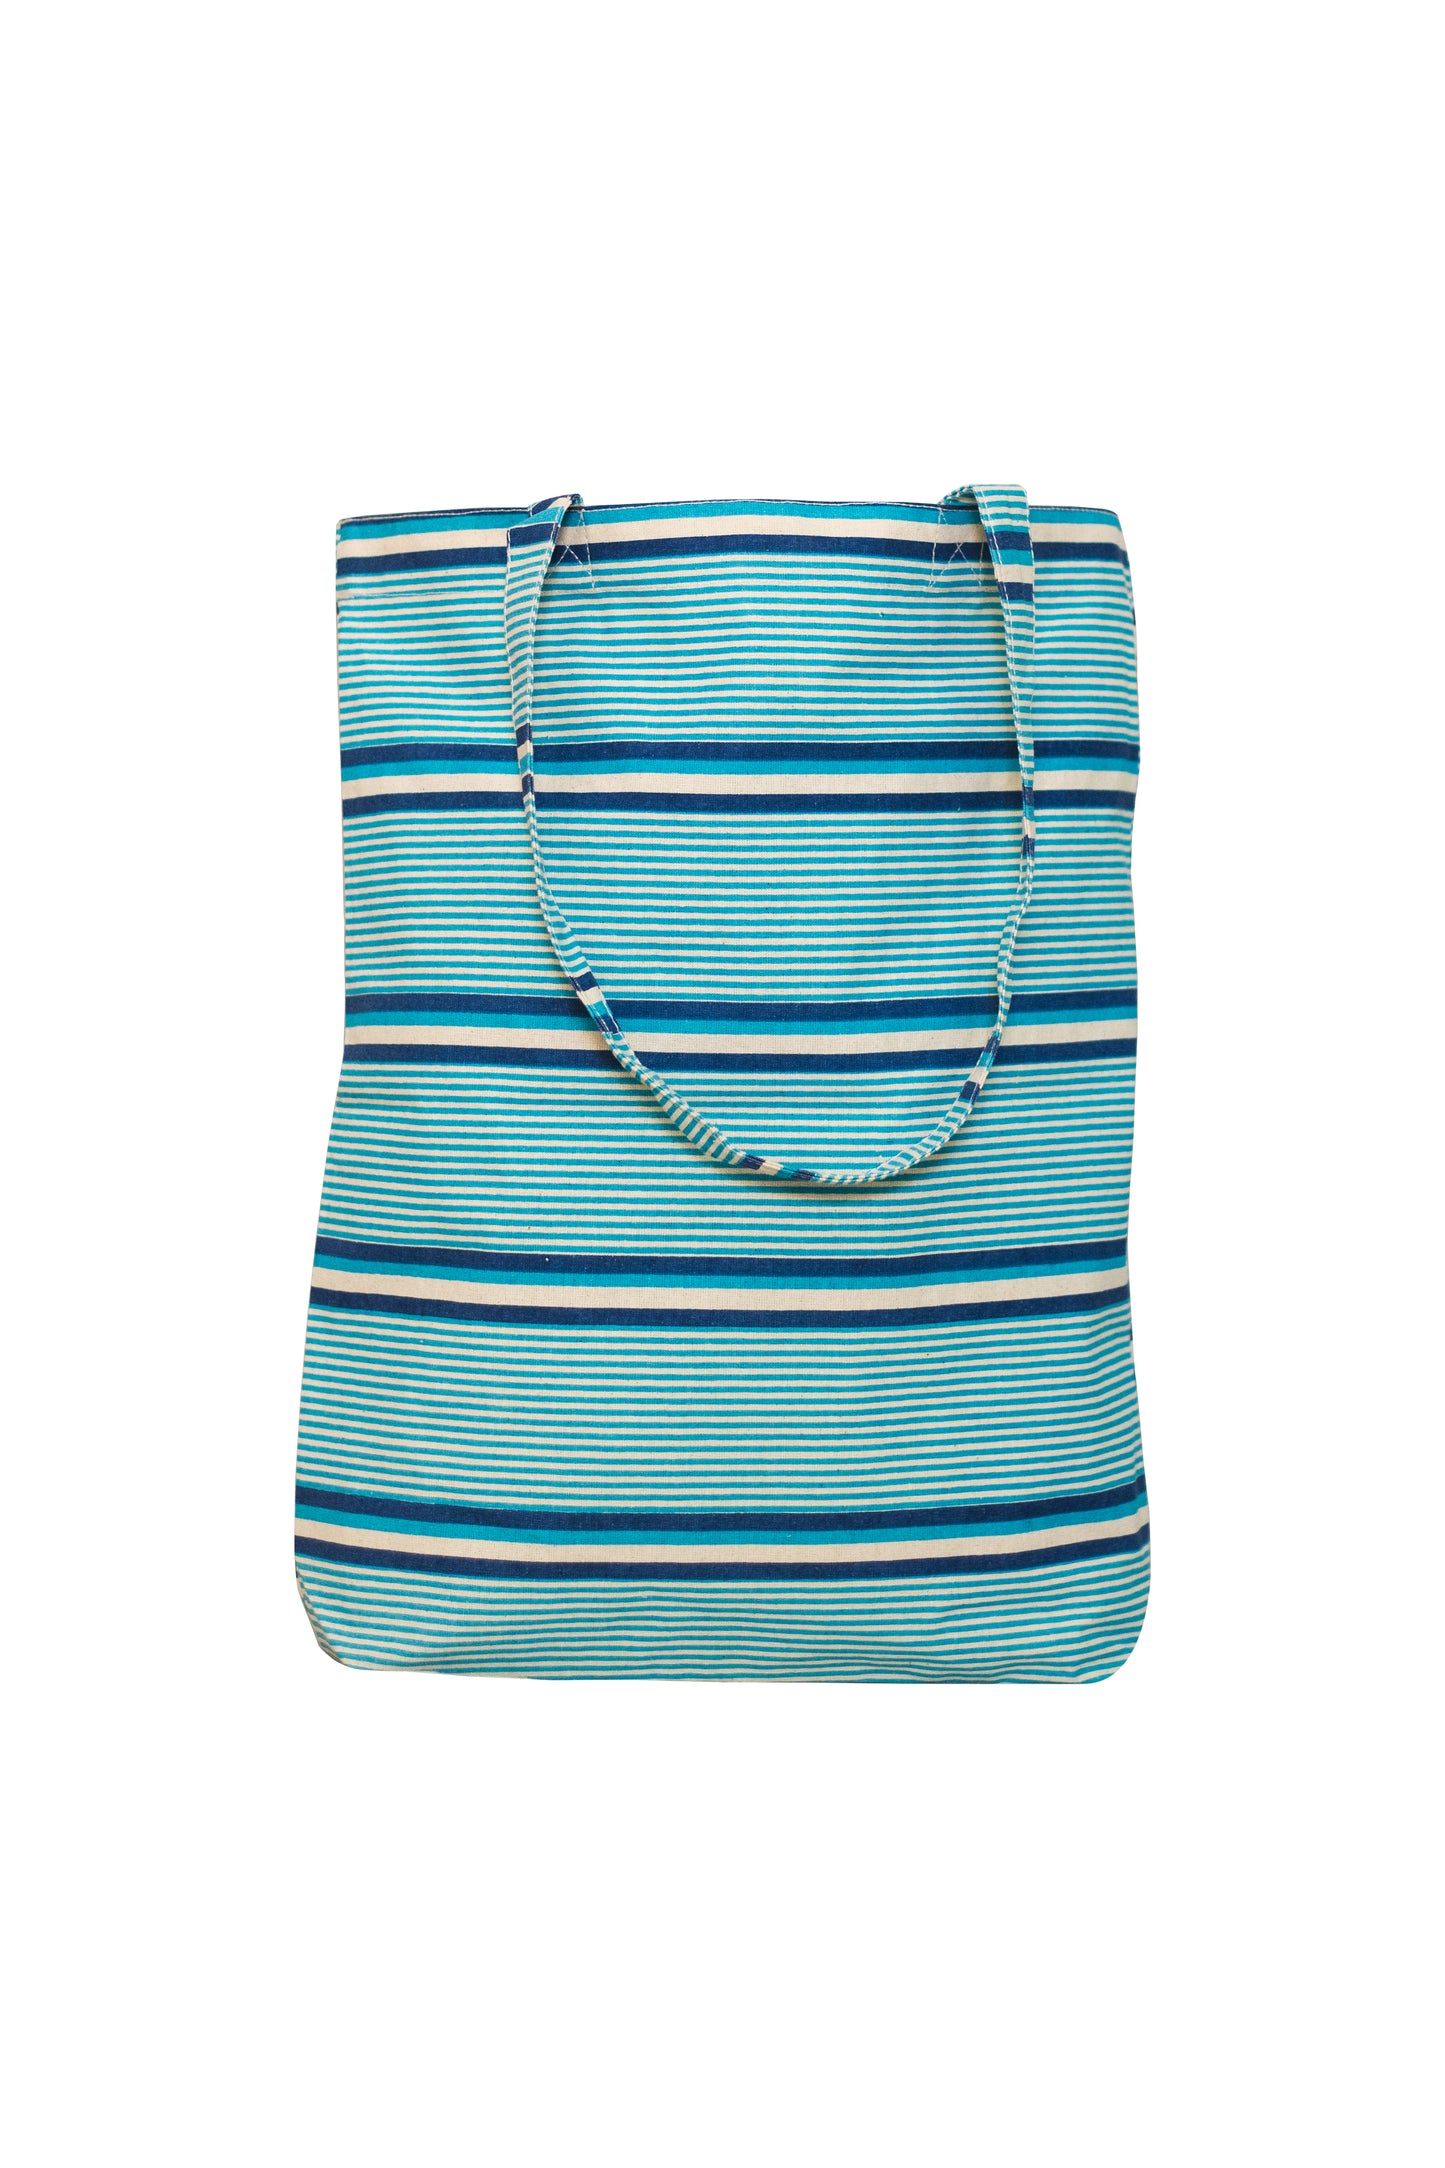 Double Stripes Blue Cotton Shopping Tote Bag